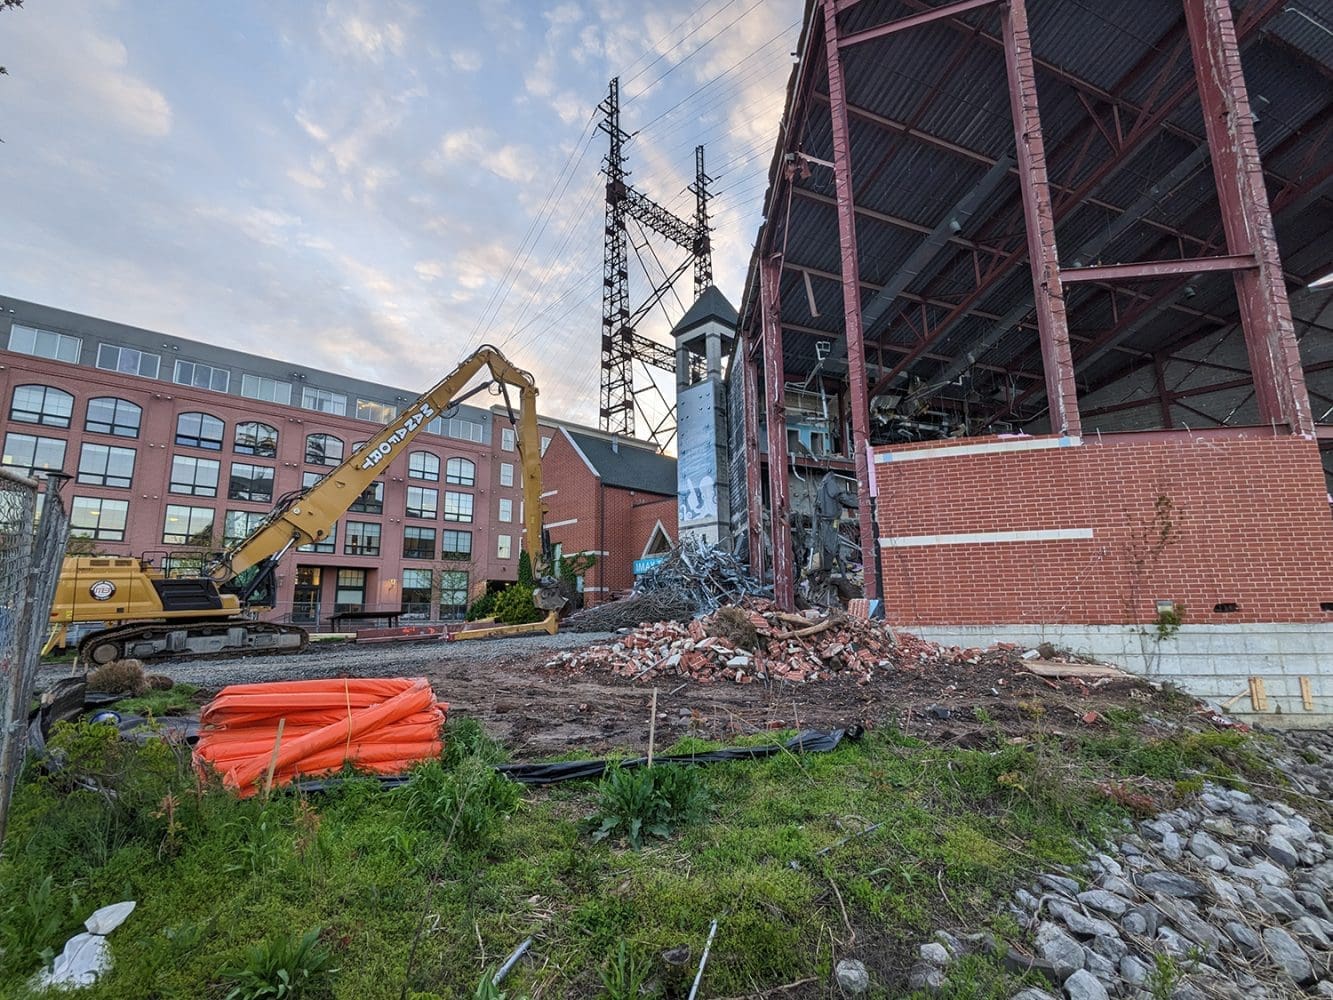 Norwalk photos: Imax demolition